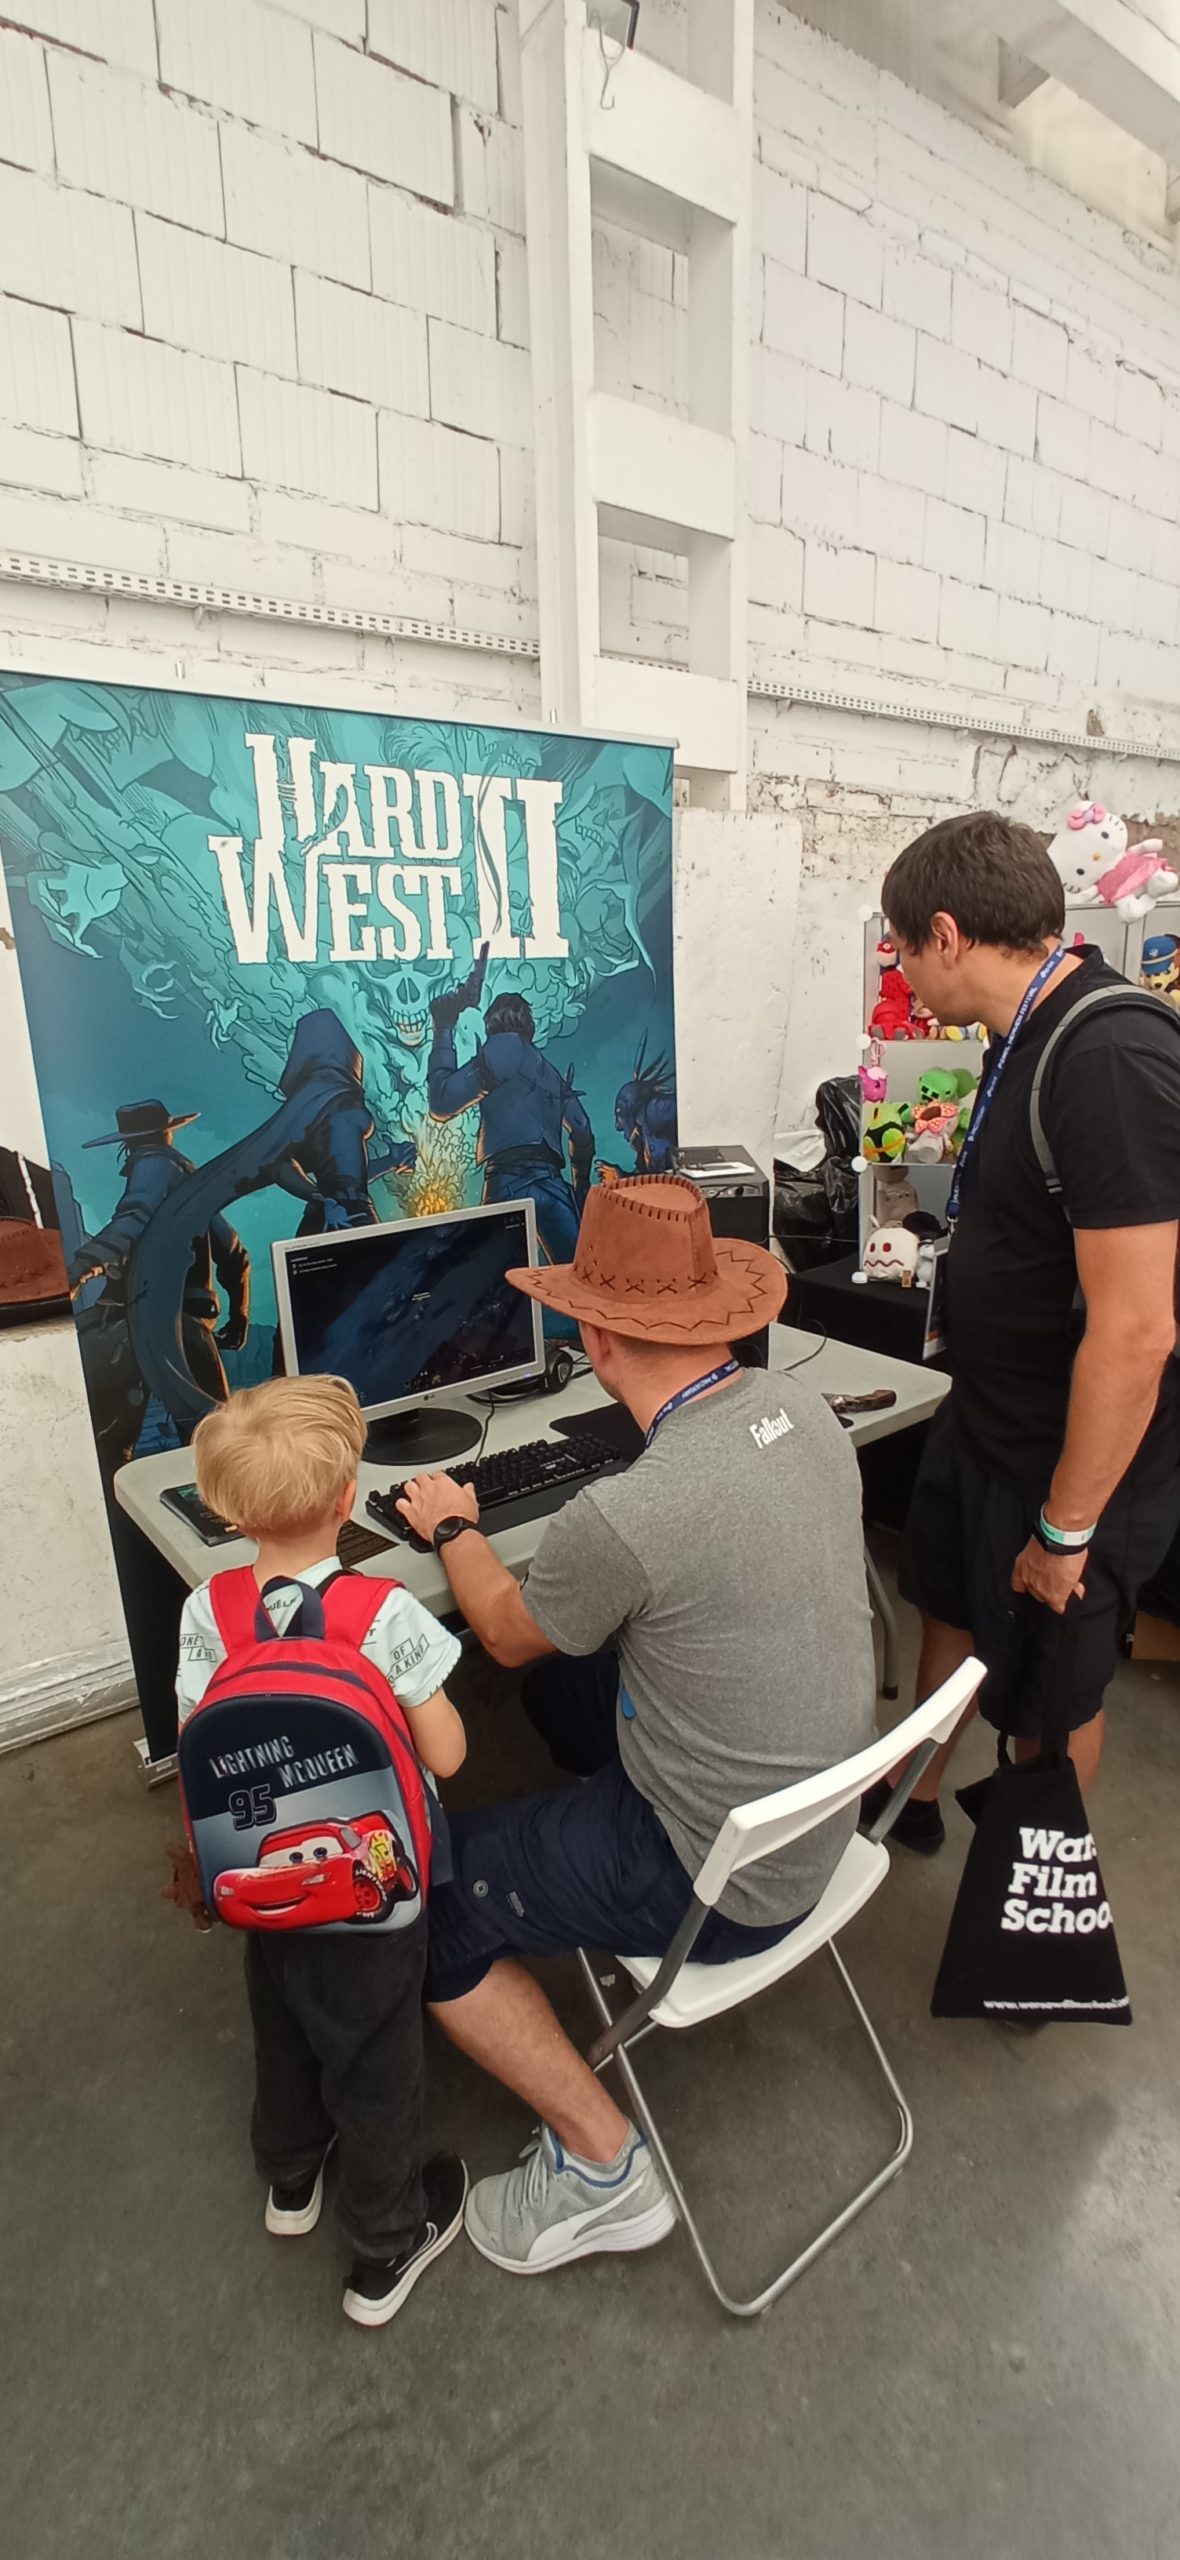 Hard West 2 on Pixel Heaven 2022 in Warsaw! - Ice Code Games